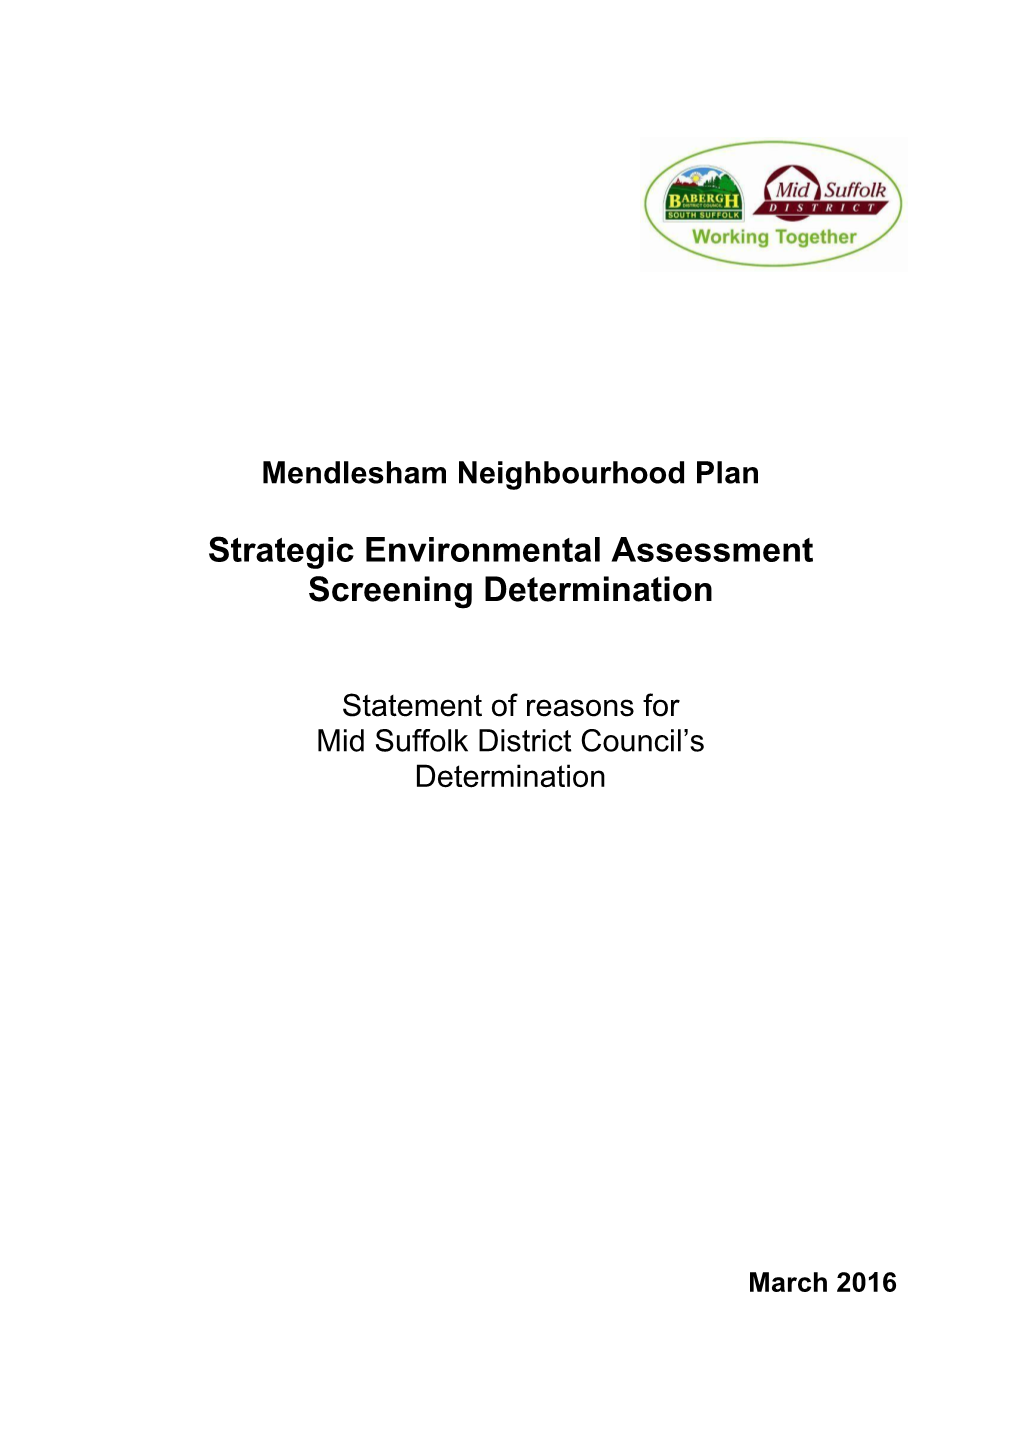 Strategic Environmental Assessment Screening Determination